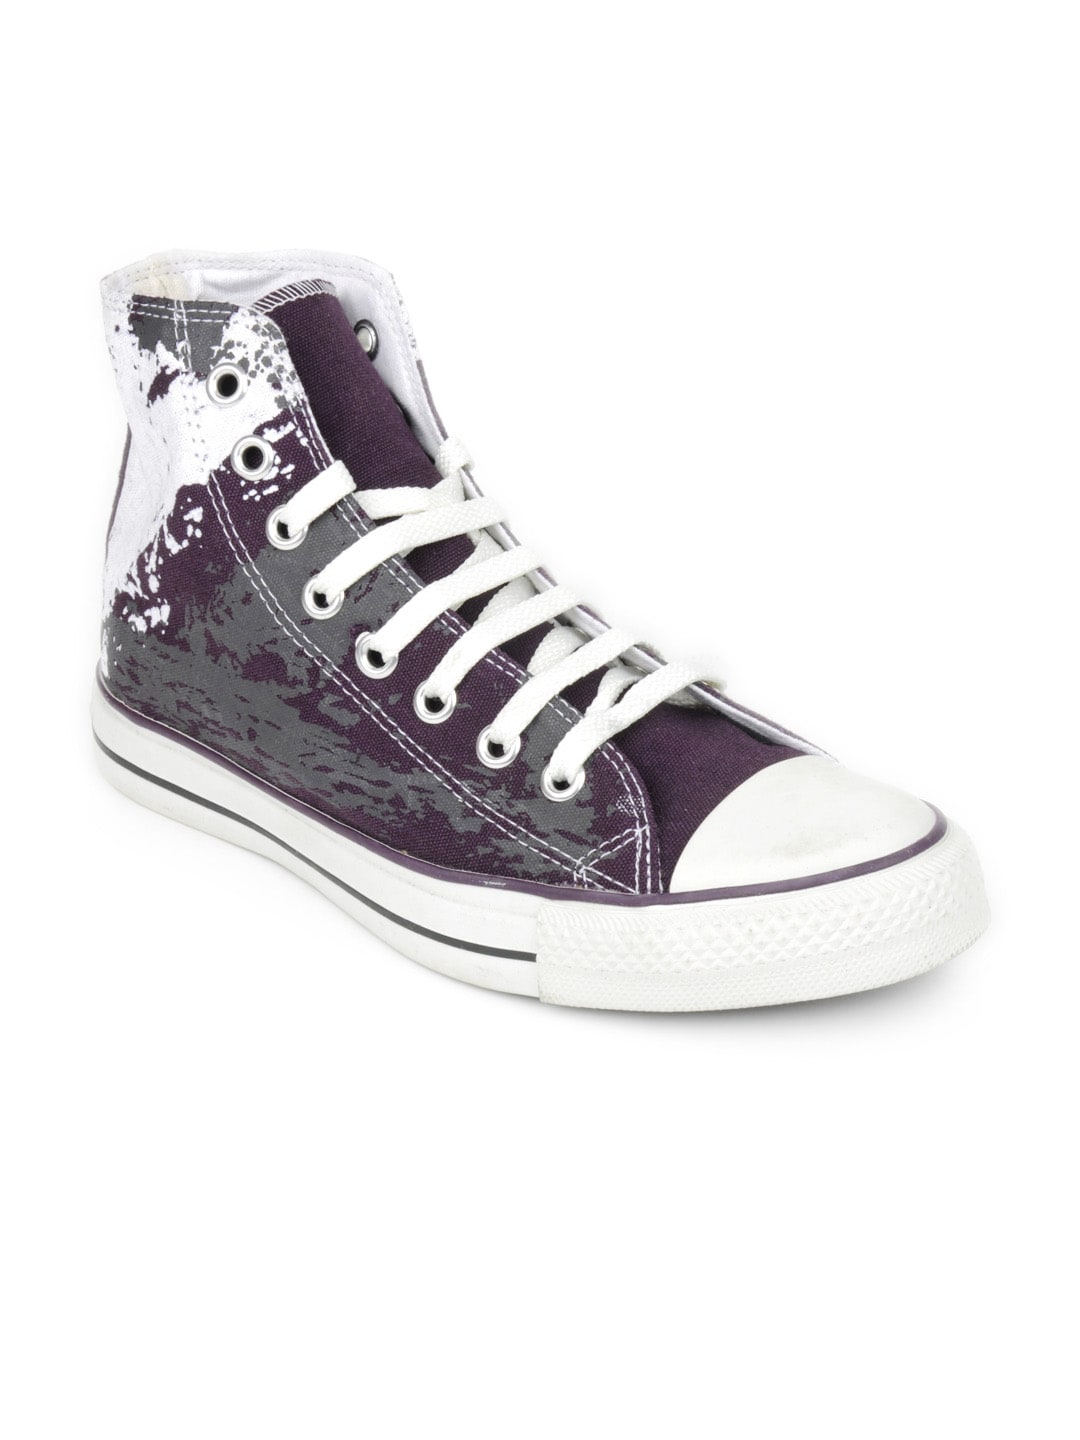 Converse Unisex Sketch Purple Casual Shoes